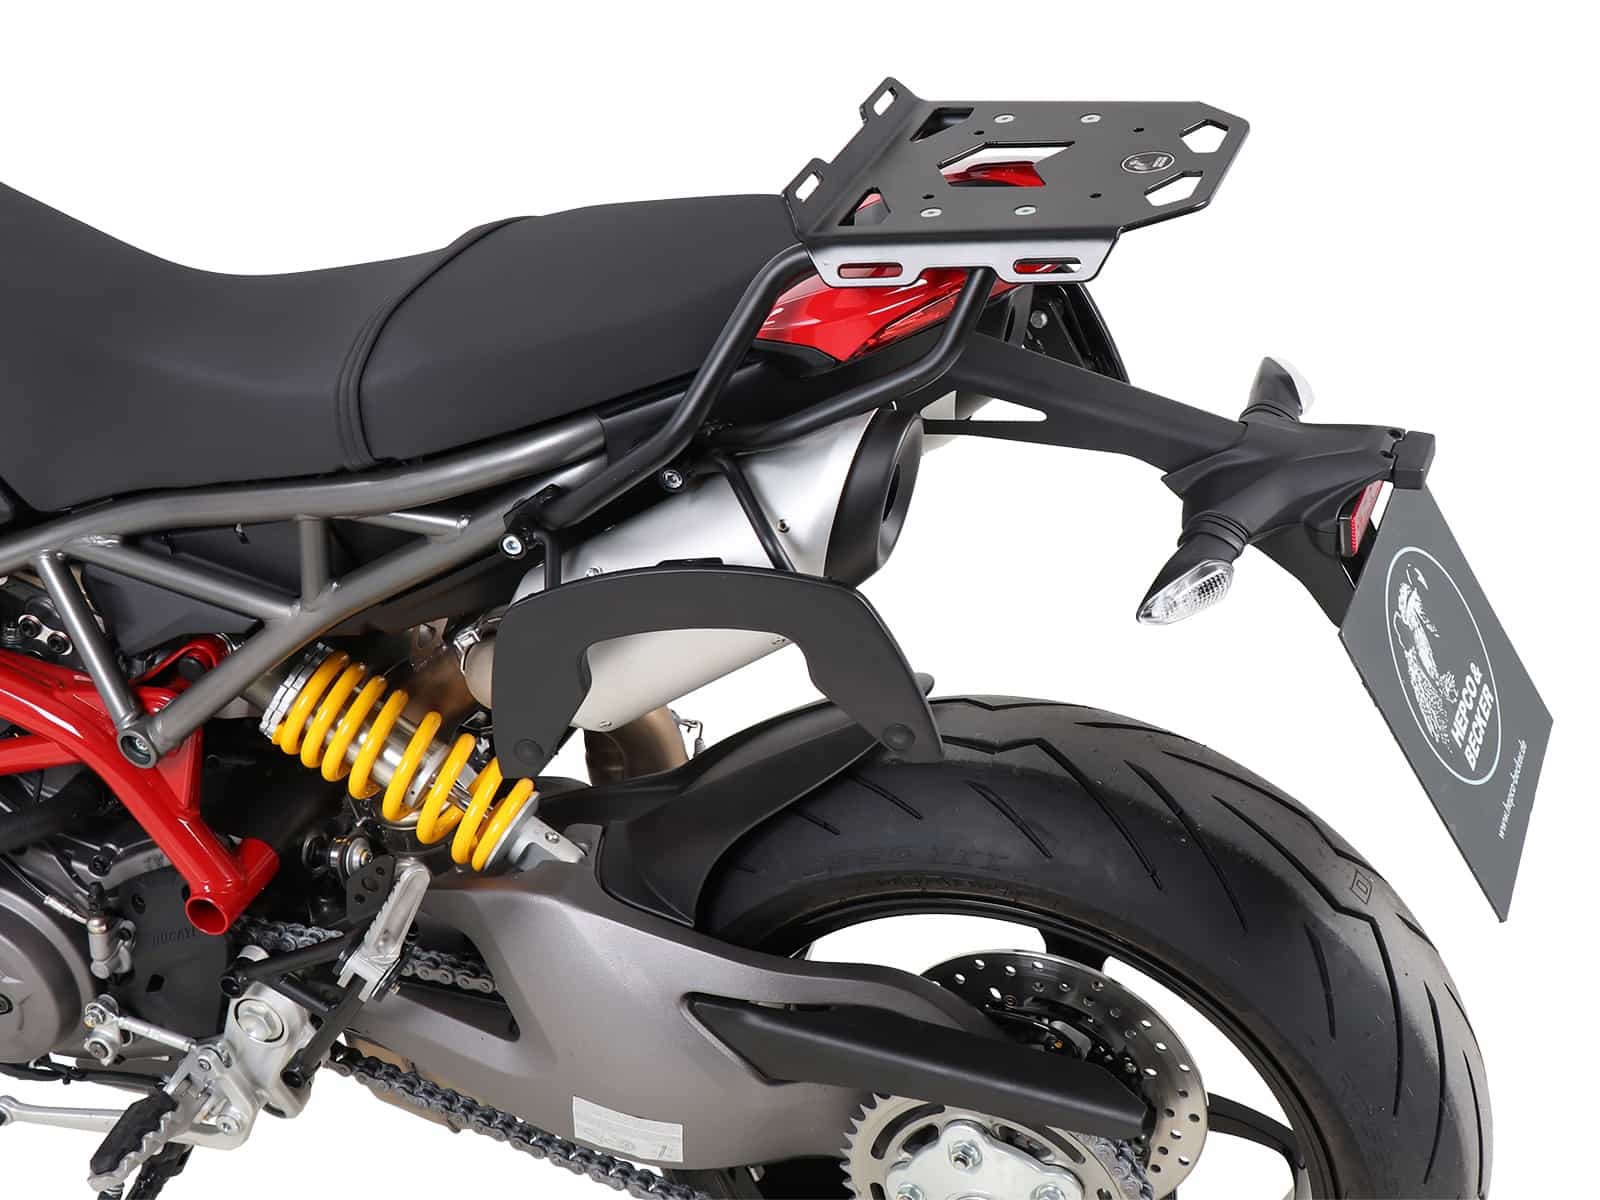 Ducati Hypermotard 950 SP 060 quarter mile acceleration times   AccelerationTimescom